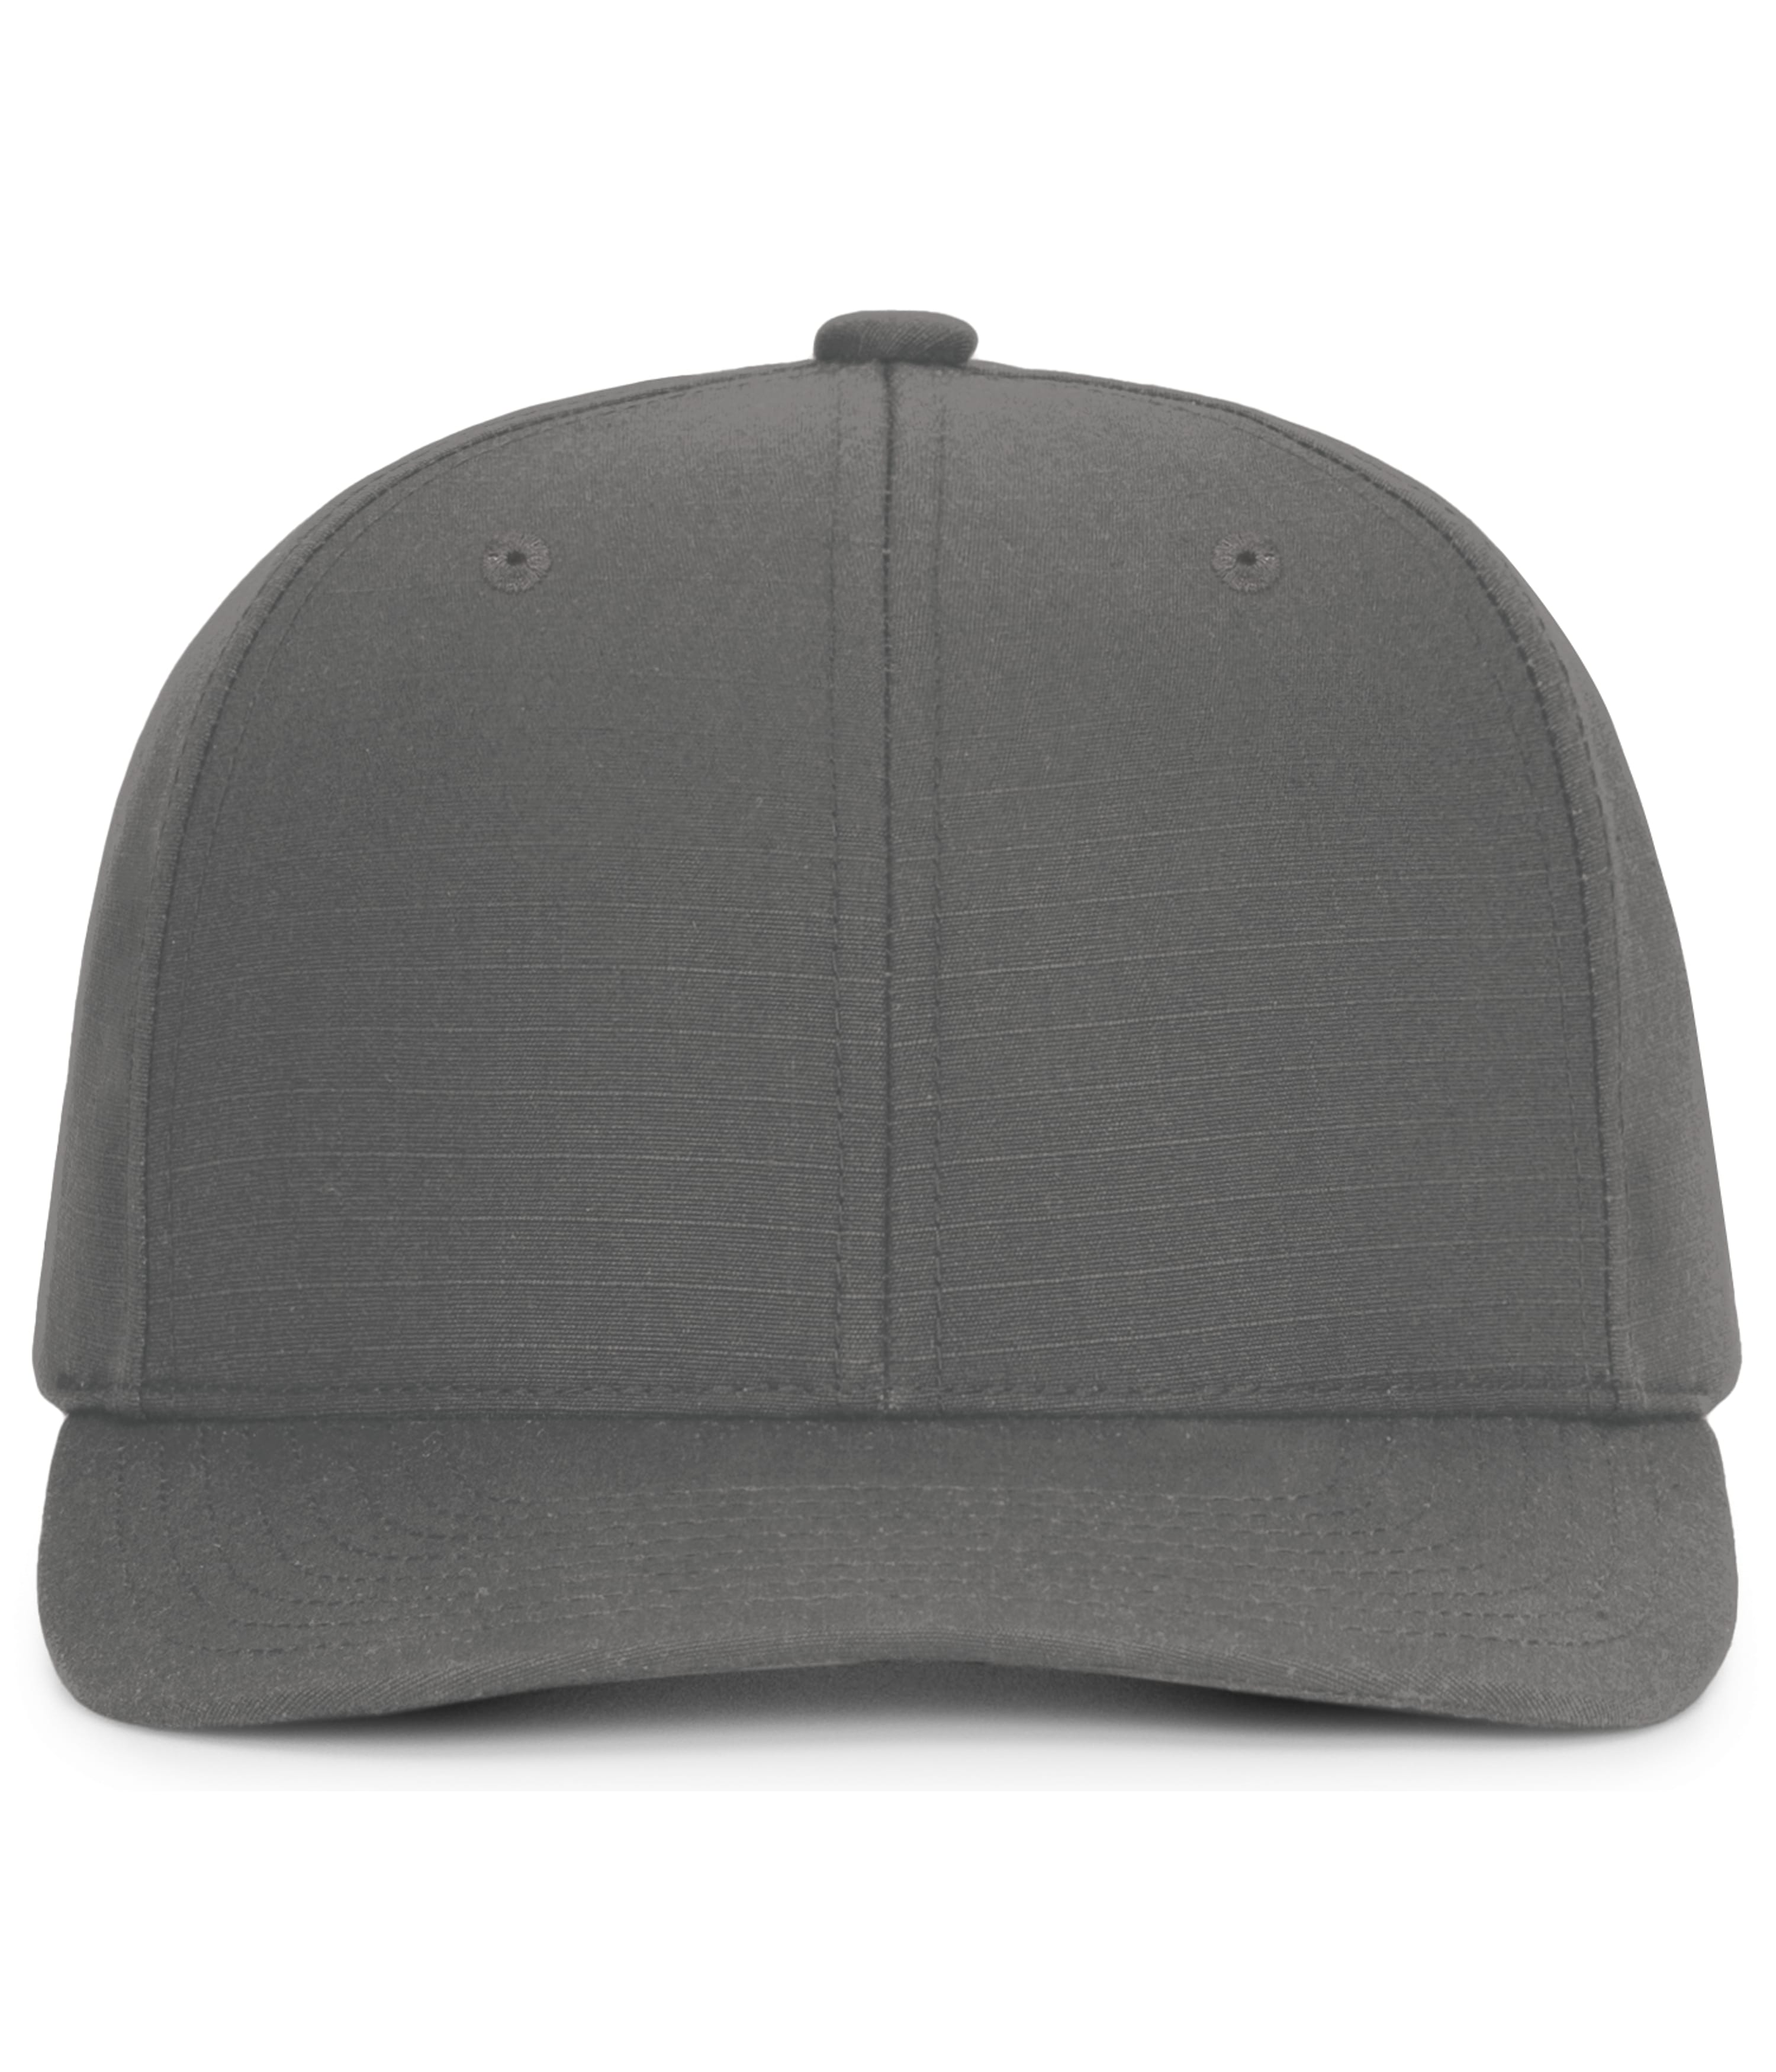 BlacktipH PVC Khaki Performance Snapback Hat - Russell's Western Wear, Inc.